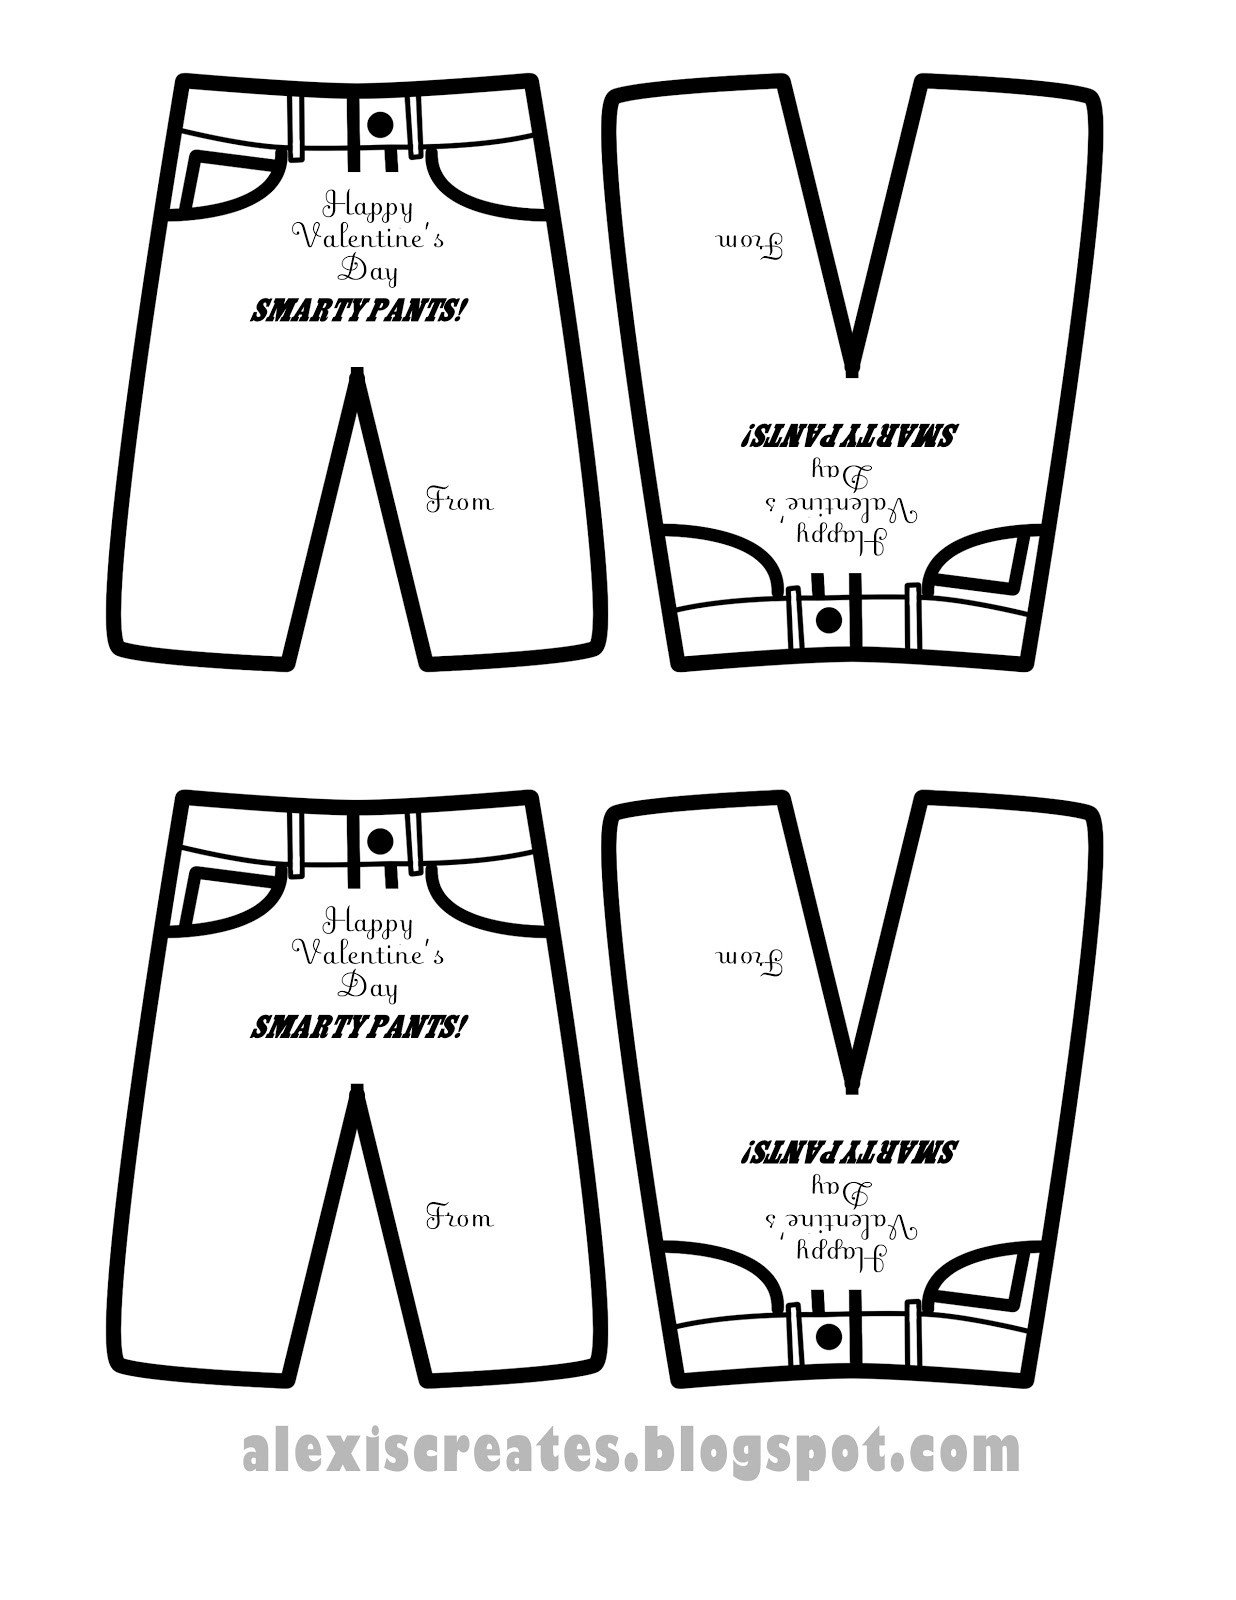 Alexis Design Gallery Printable Smarty Pants Valentine